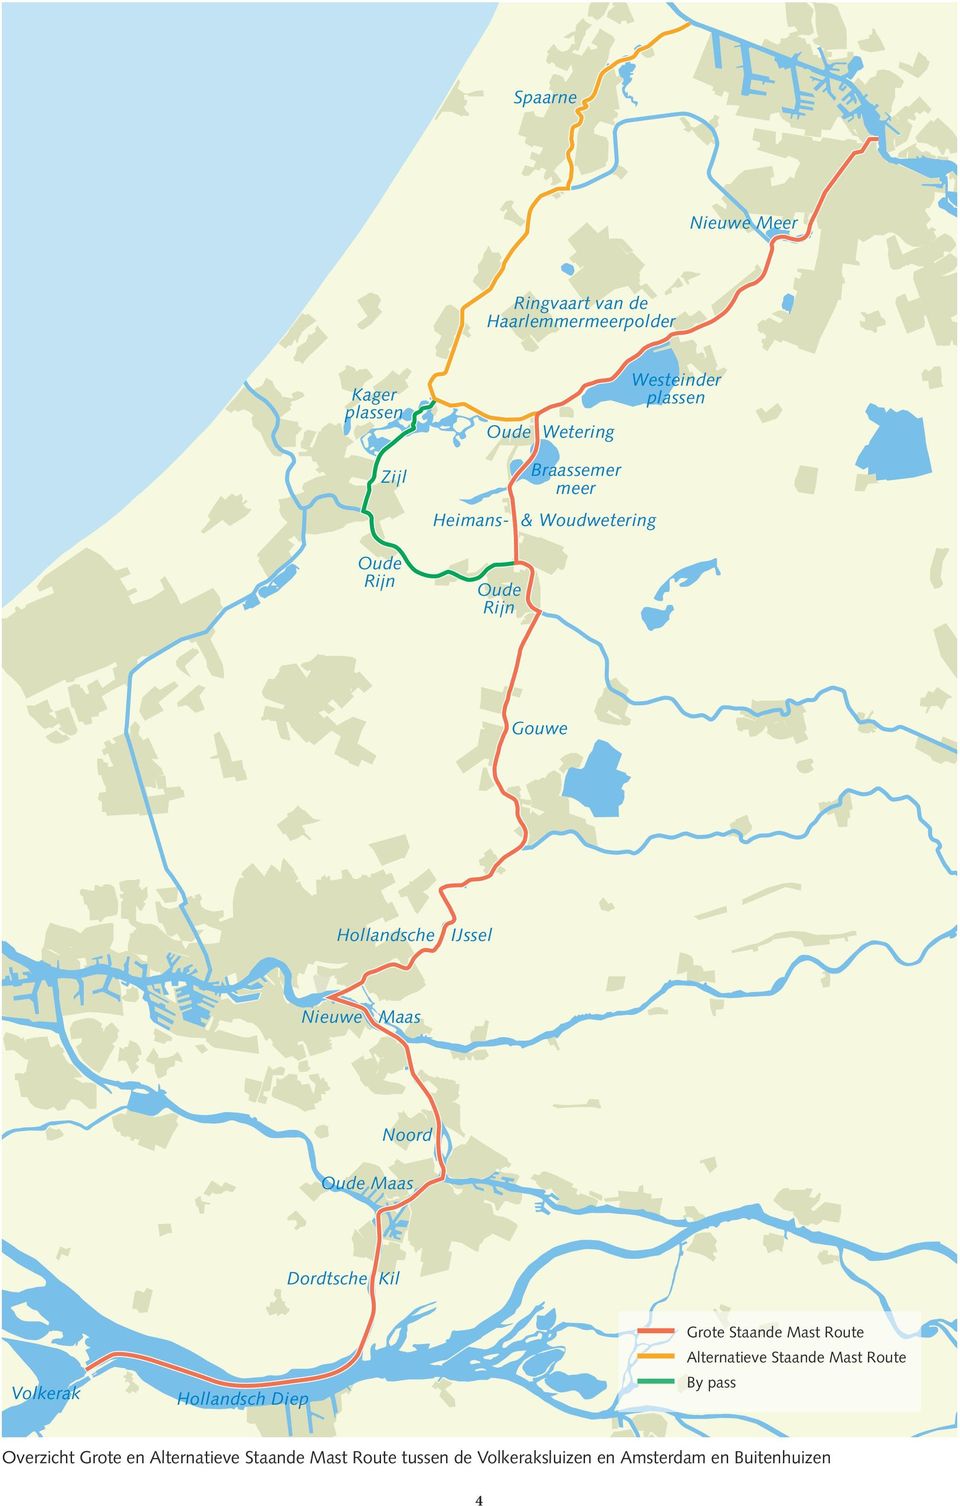 Oude Maas Dordtsche Kil Volkerak Hollandsch Diep Grote Staande Mast Route Alternatieve Staande Mast Route By